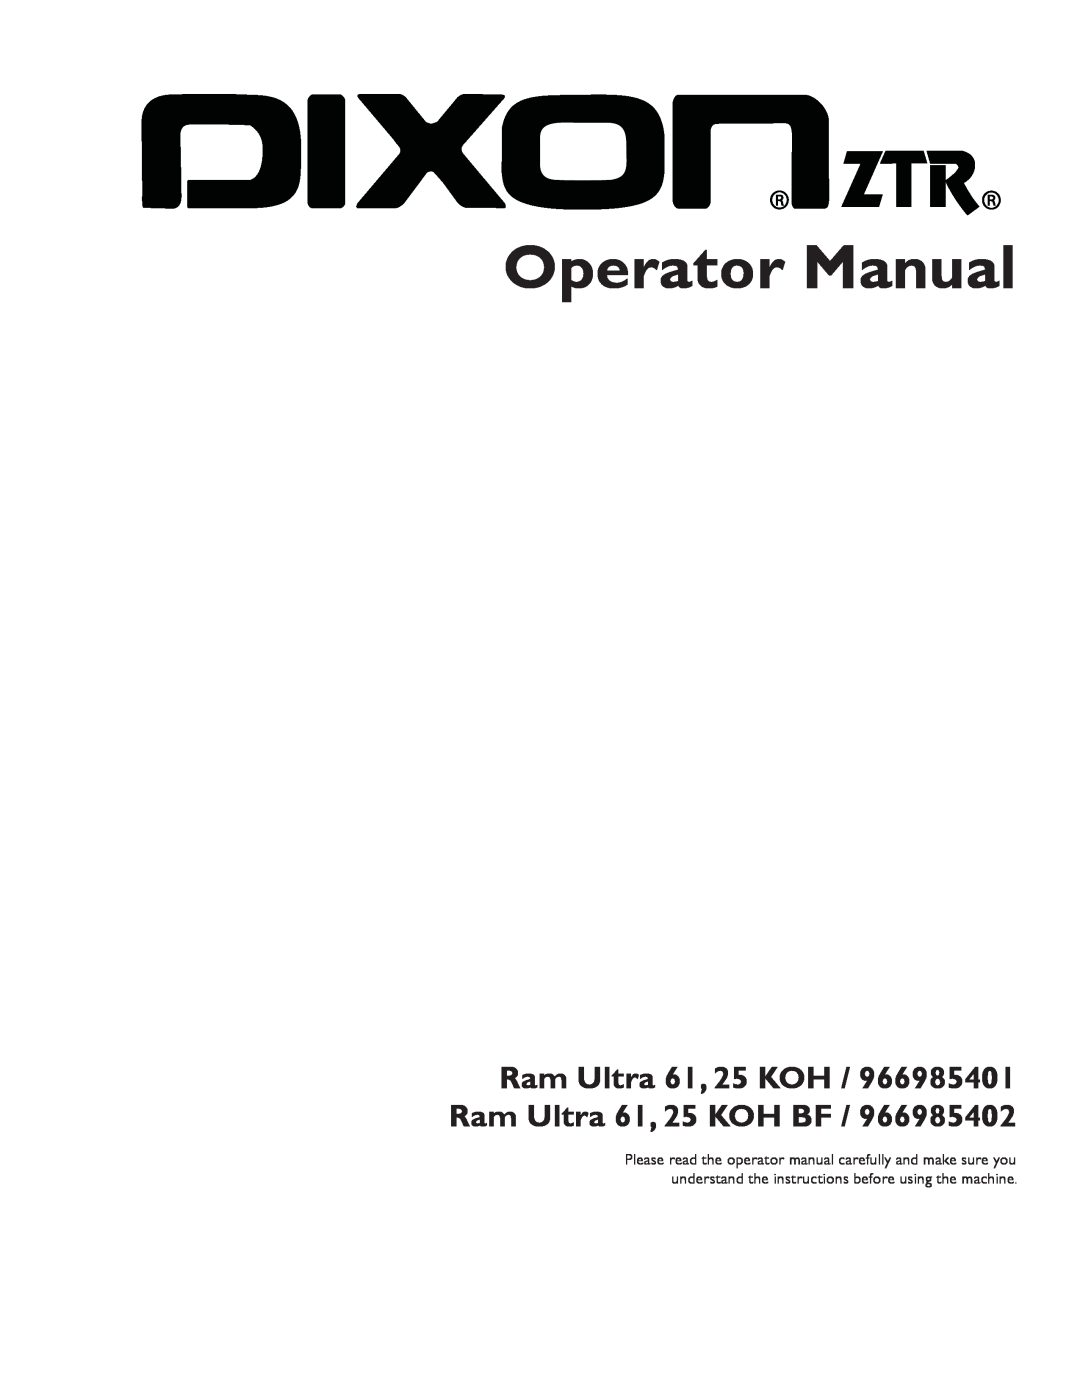 Dixon 966985402 manual Operator Manual, Ram Ultra 61, 25 KOH / 966985401 Ram Ultra 61, 25 KOH BF 